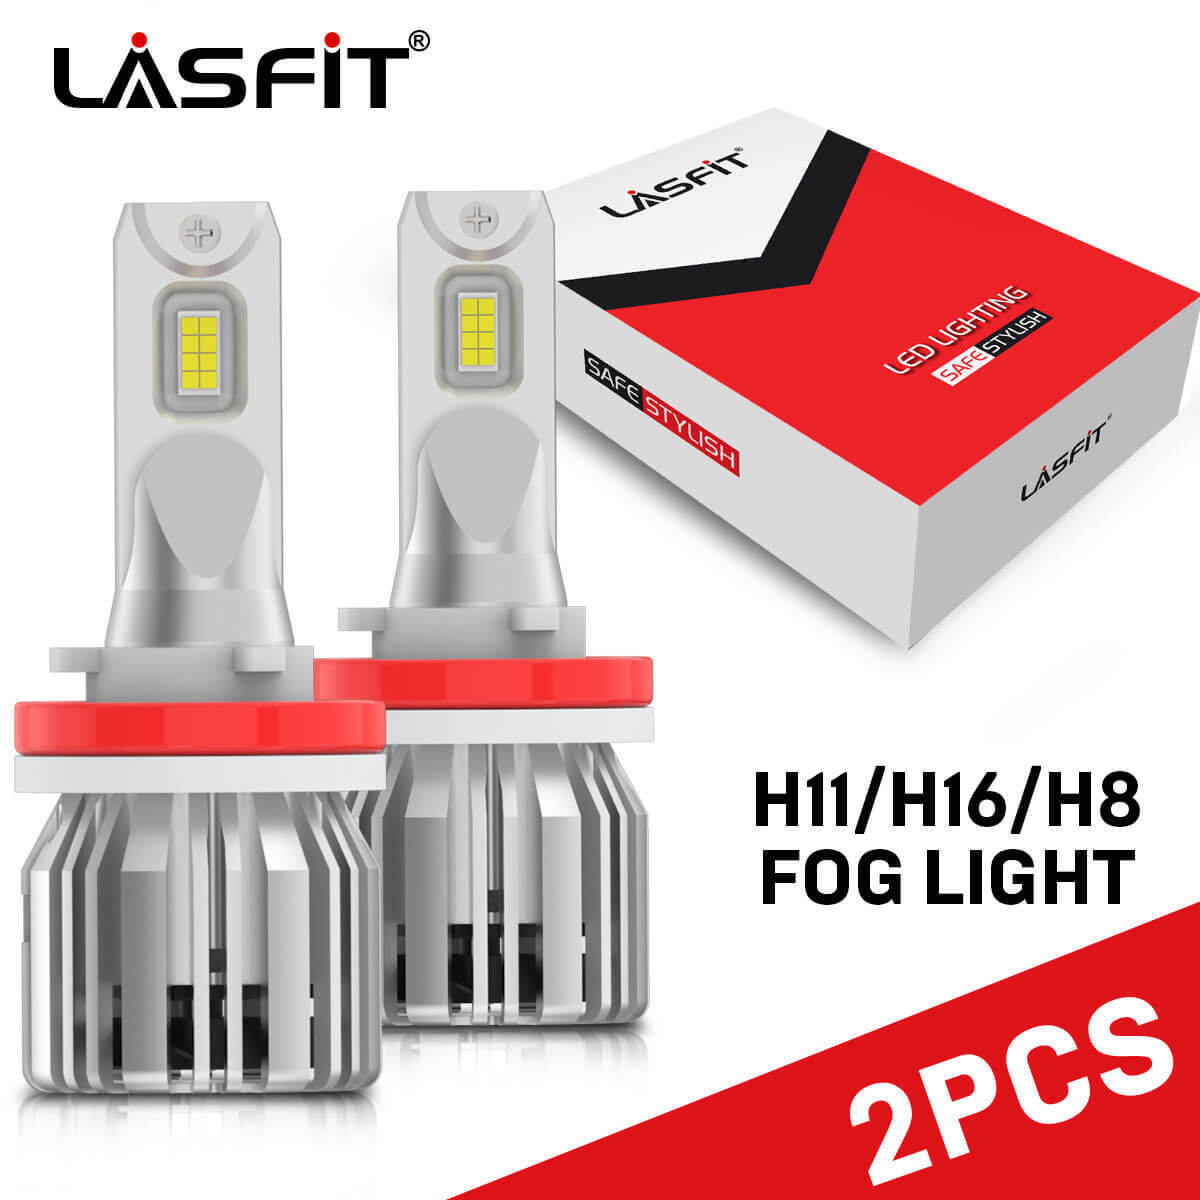 H16 H11 LED Fog Light Bulbs Conversion Kits 6000K White 5000LM 50W Super Bright